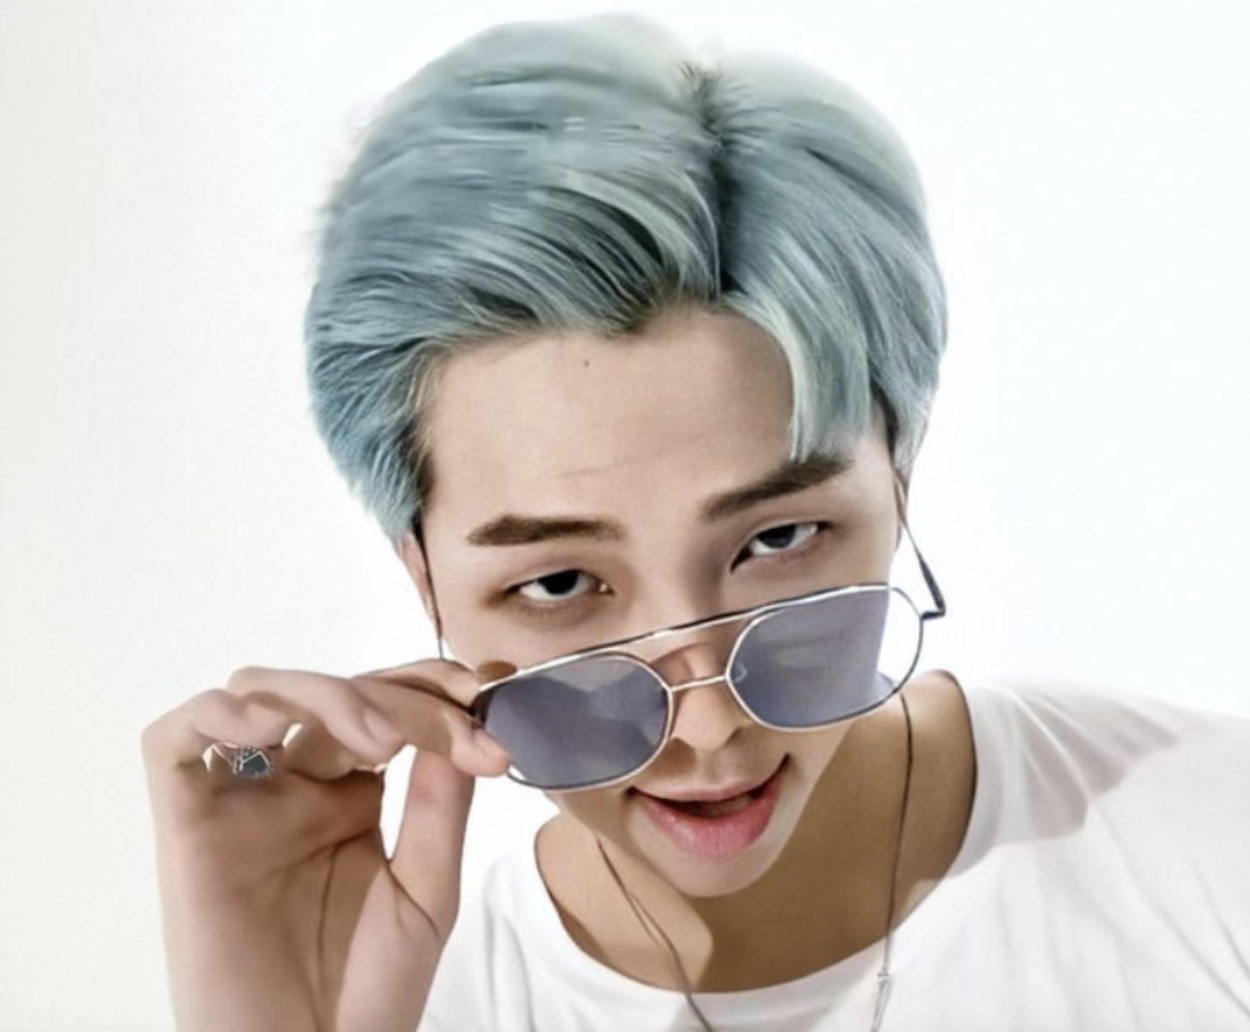 Blue hair boy BTS RM - wide 2